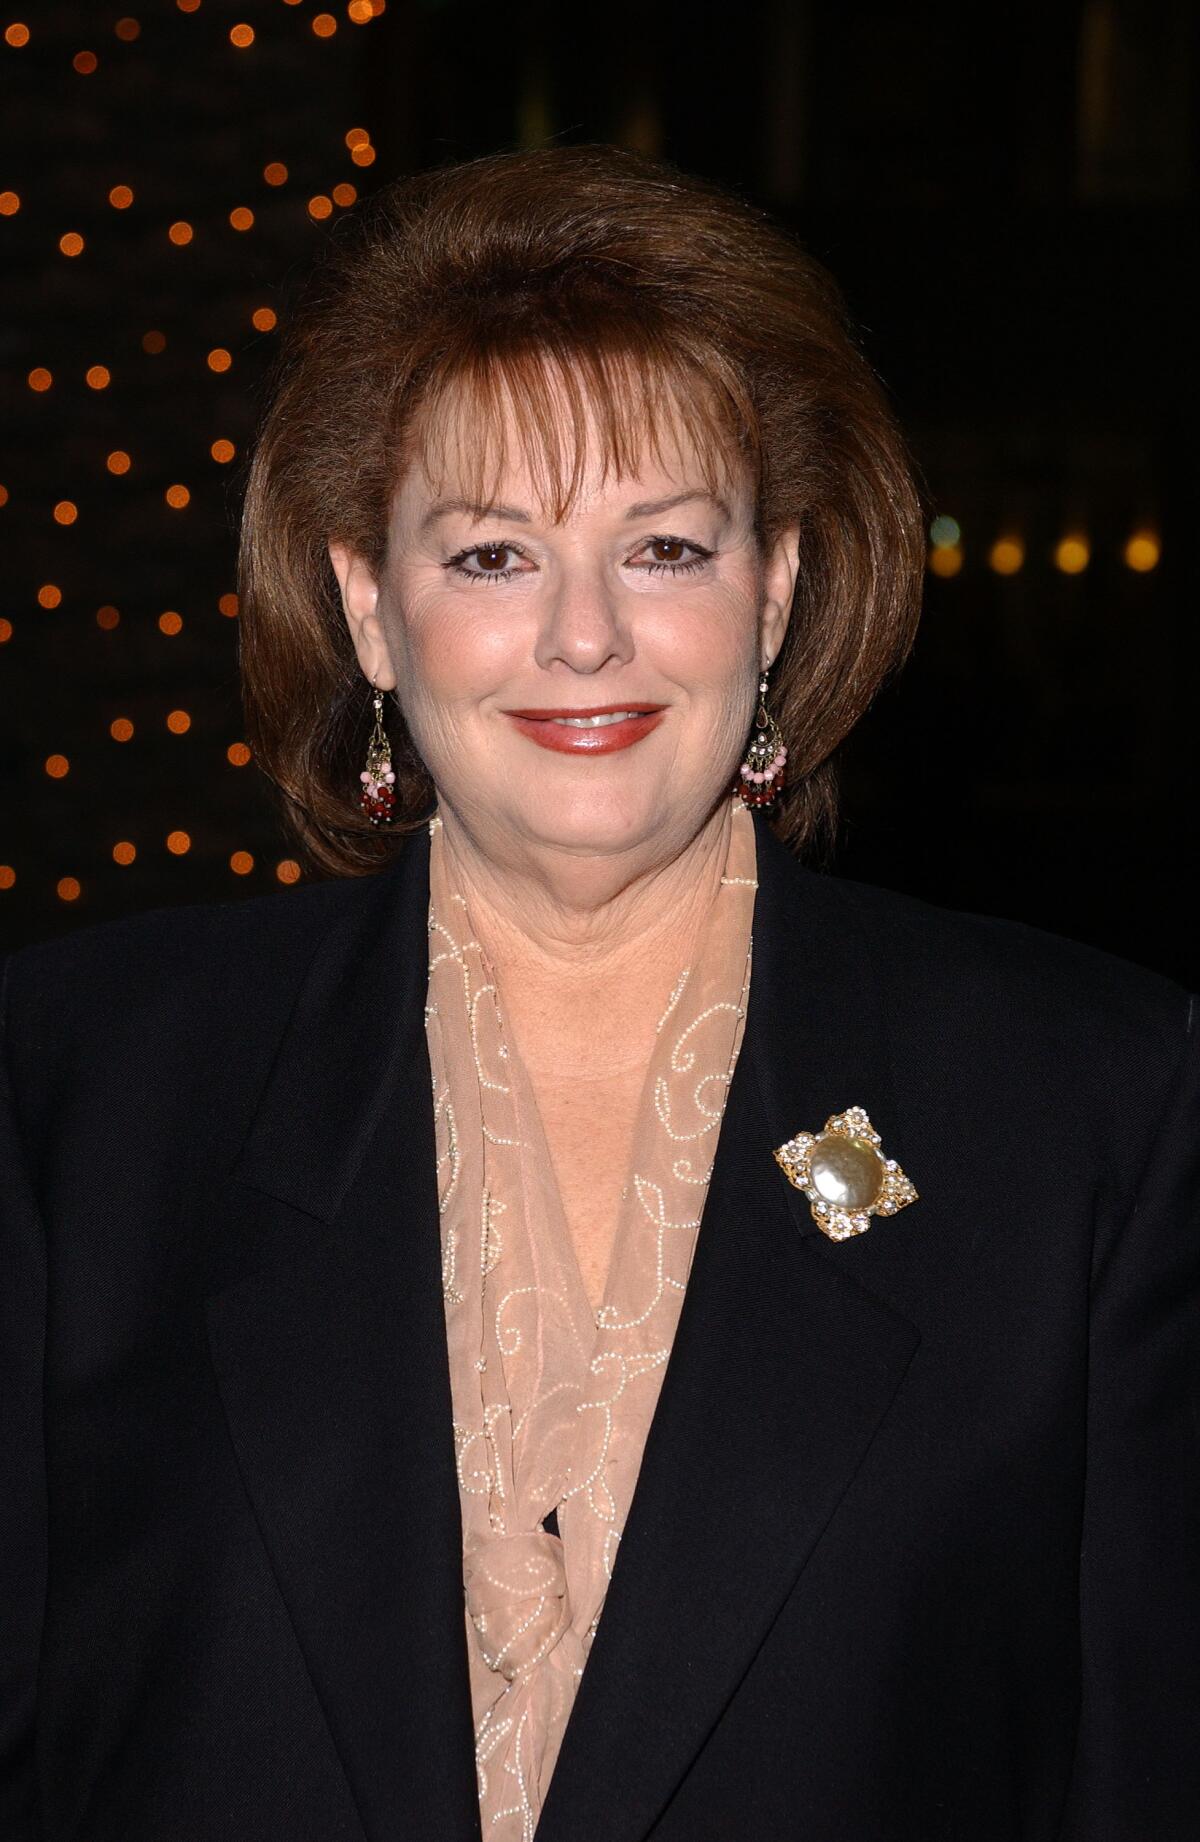 Deborah Joy Levine in a dark blazer posing for a photo.